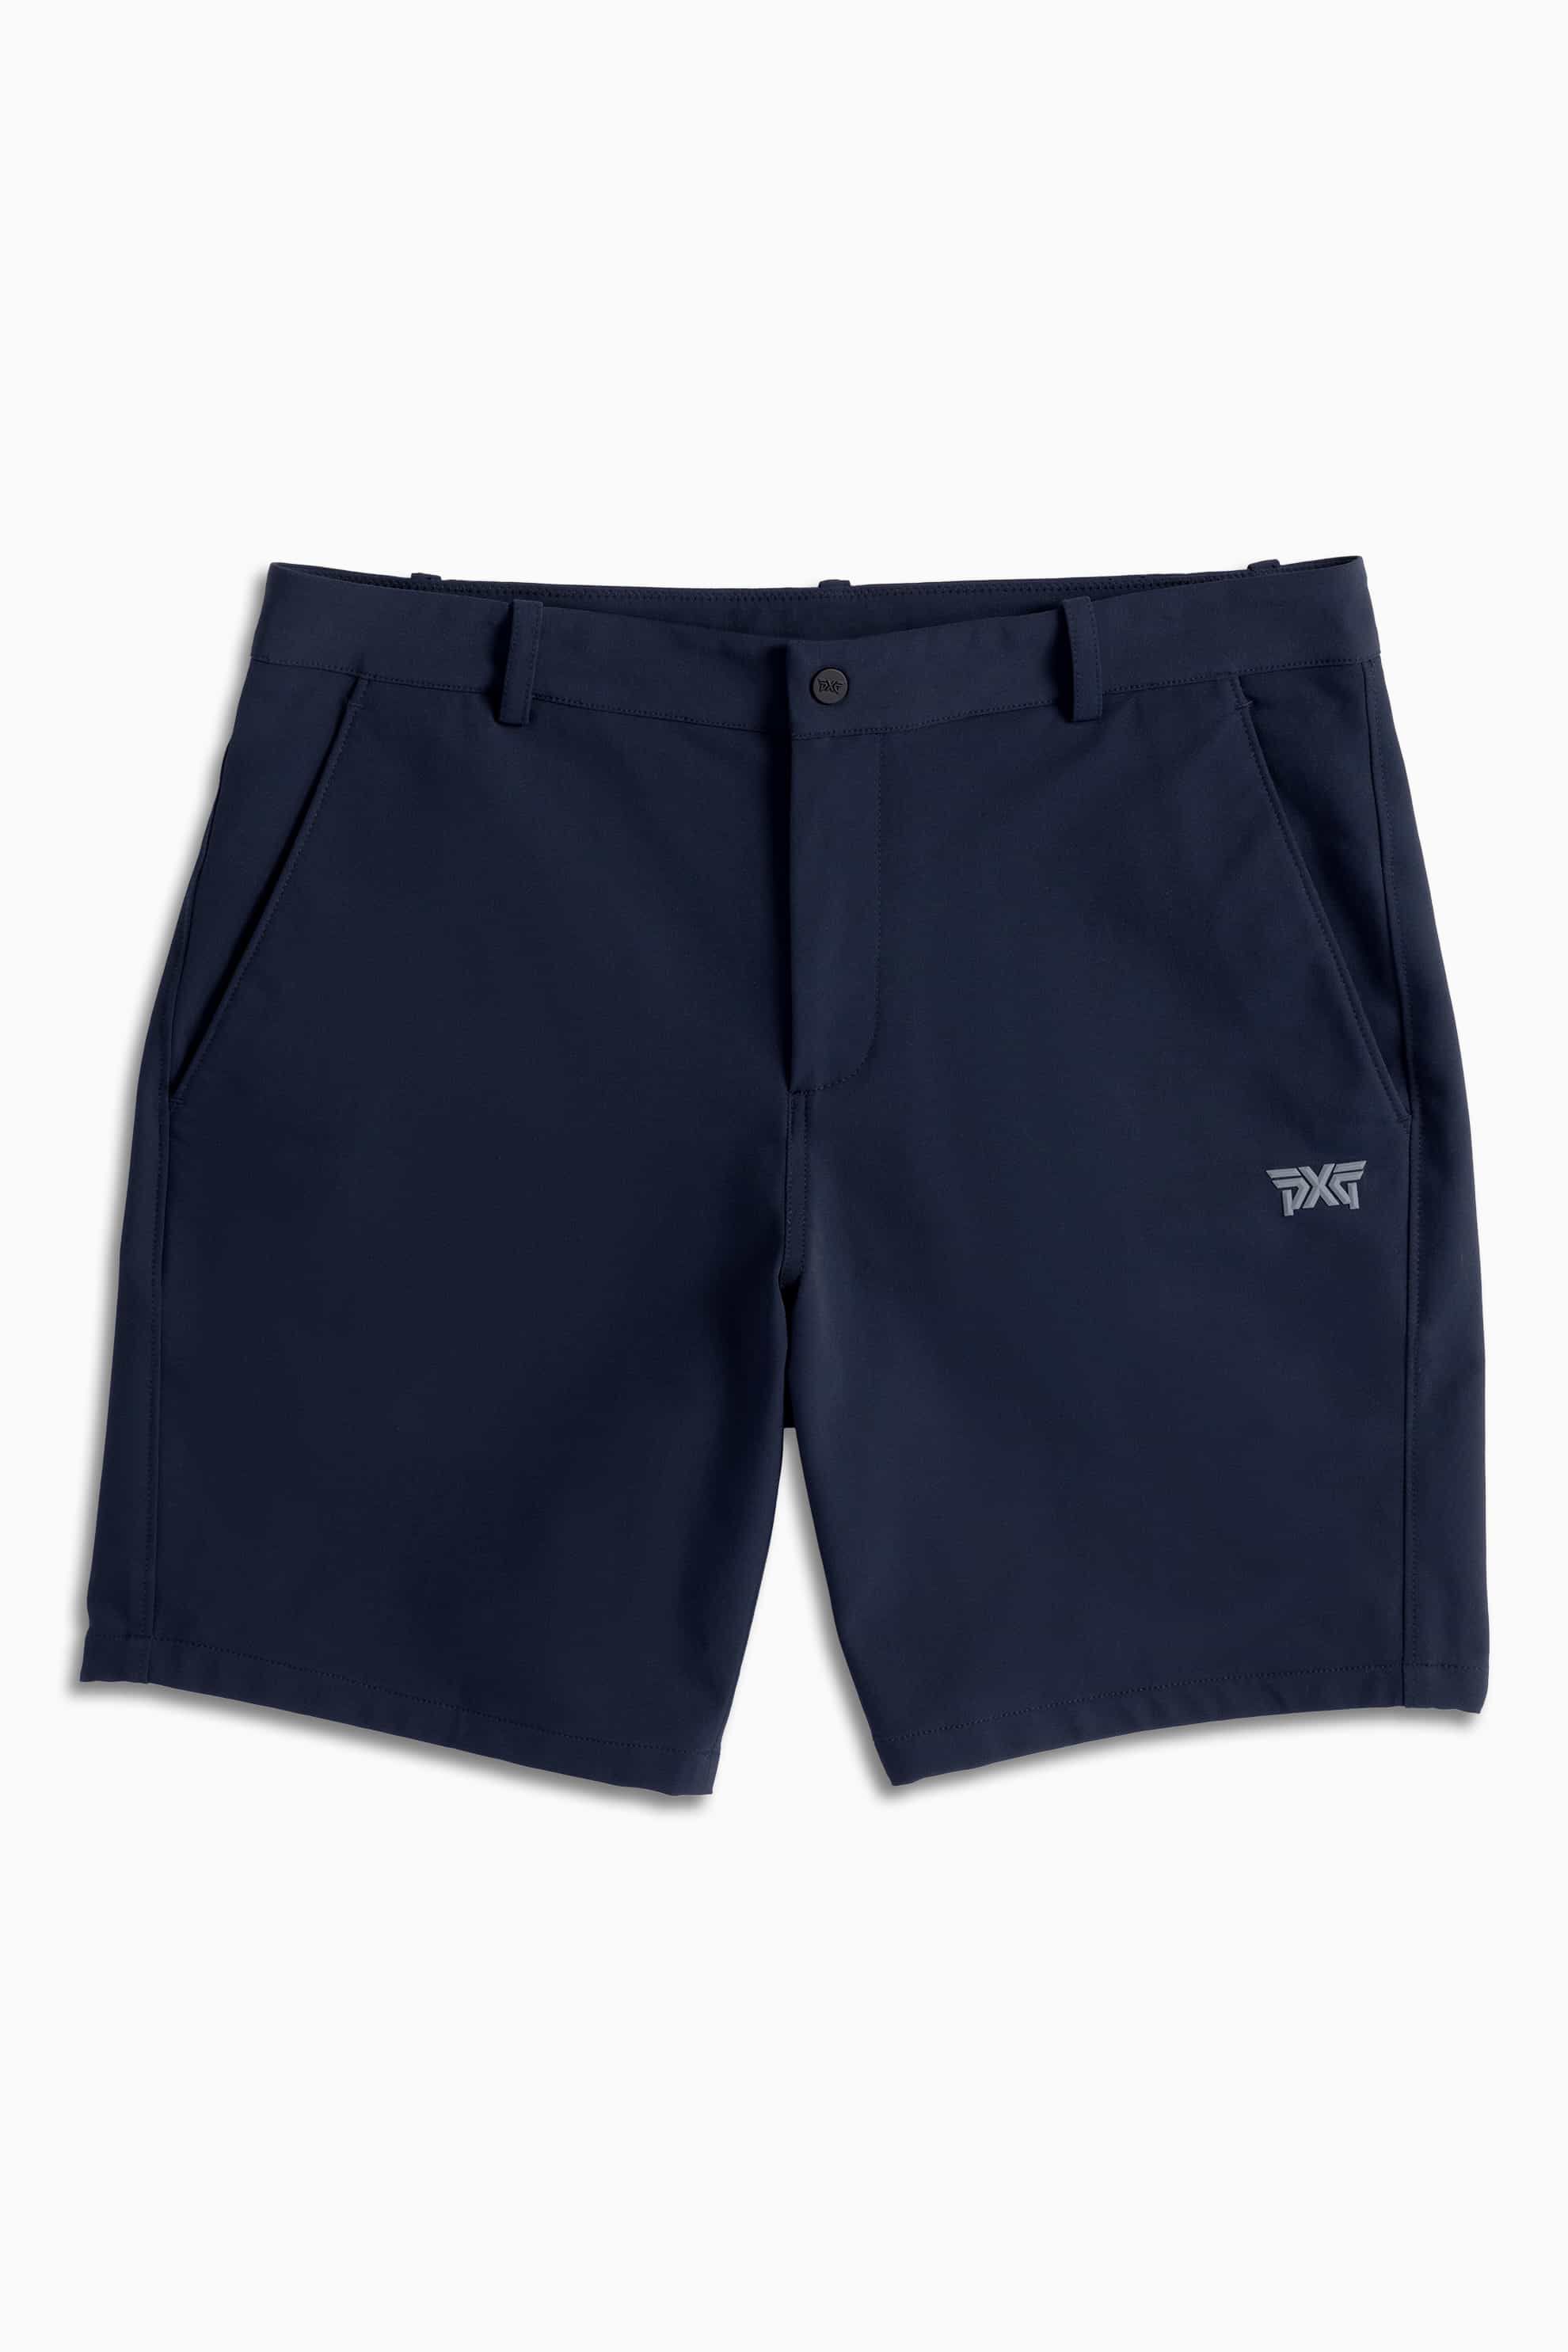 Shop Men's Golf Pants and Shorts